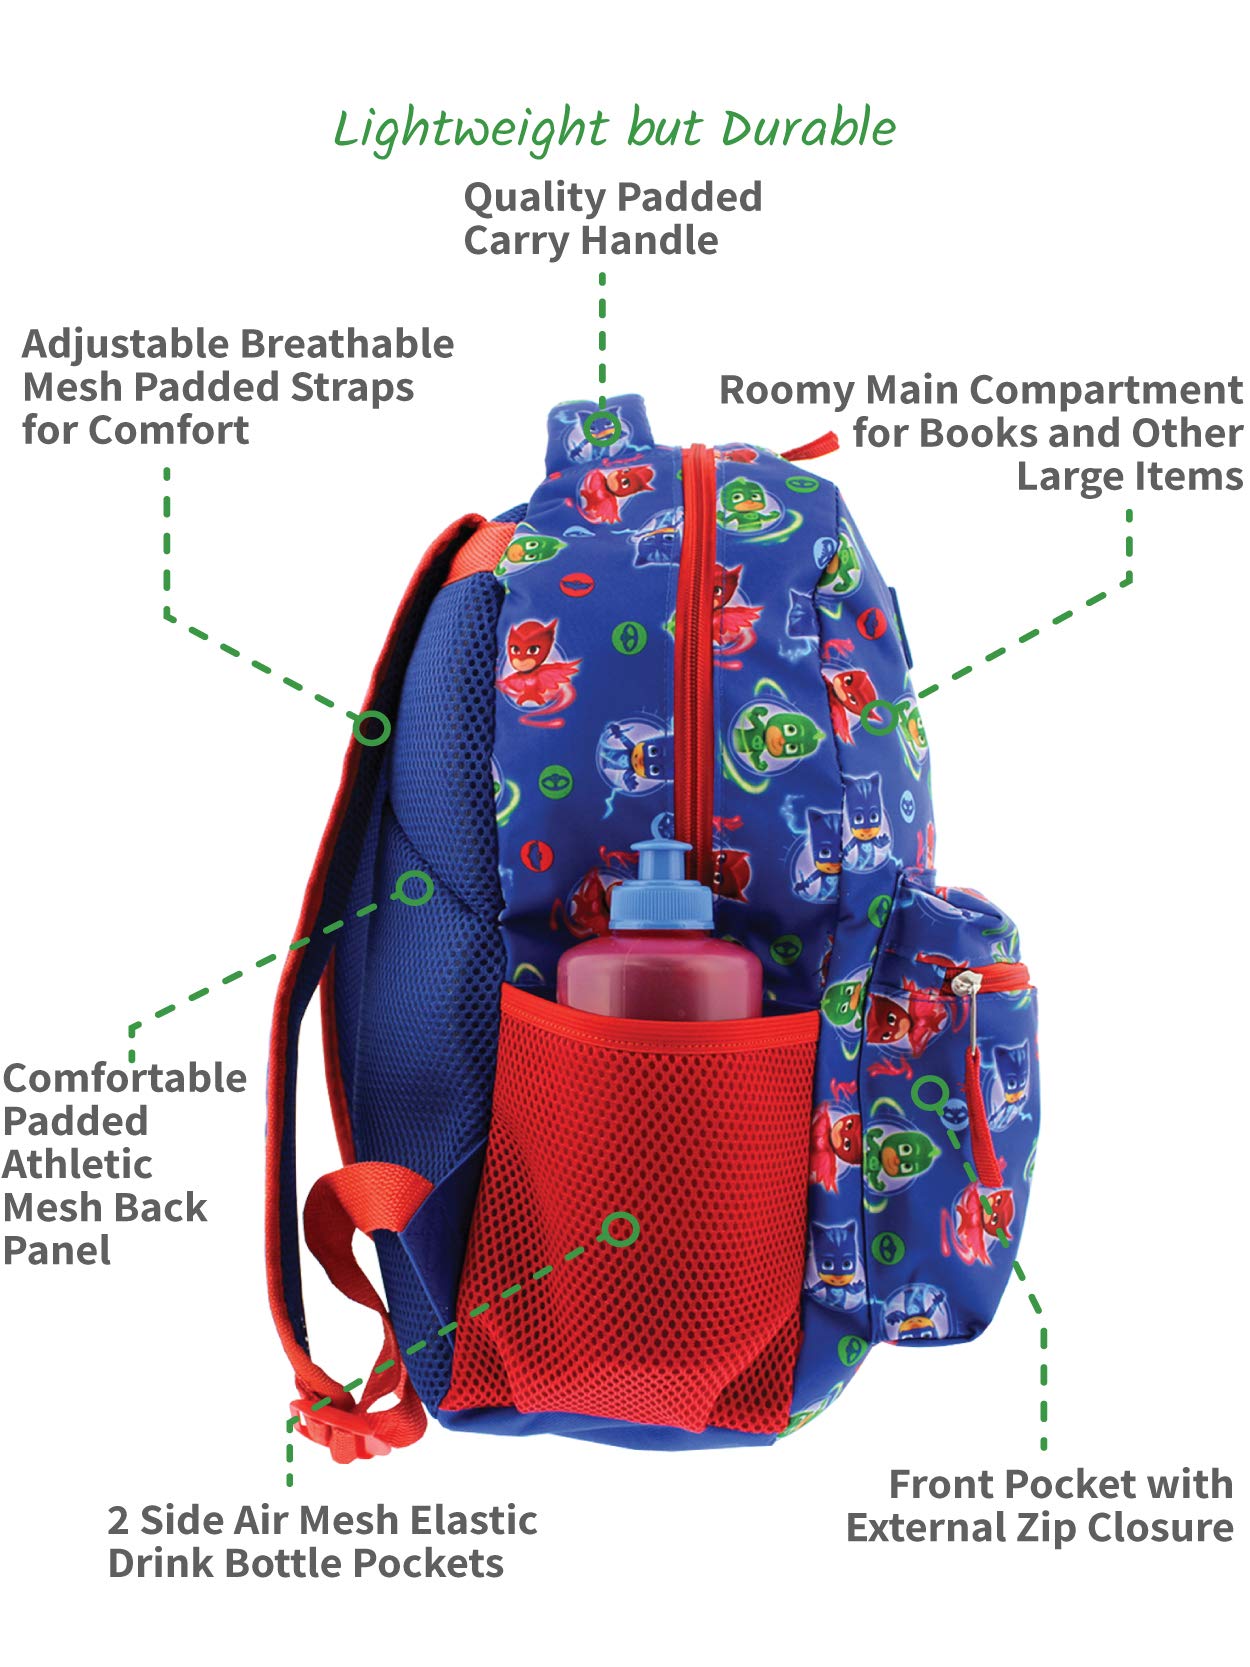 Disney PJ Masks Boy's 16 inch School Backpack